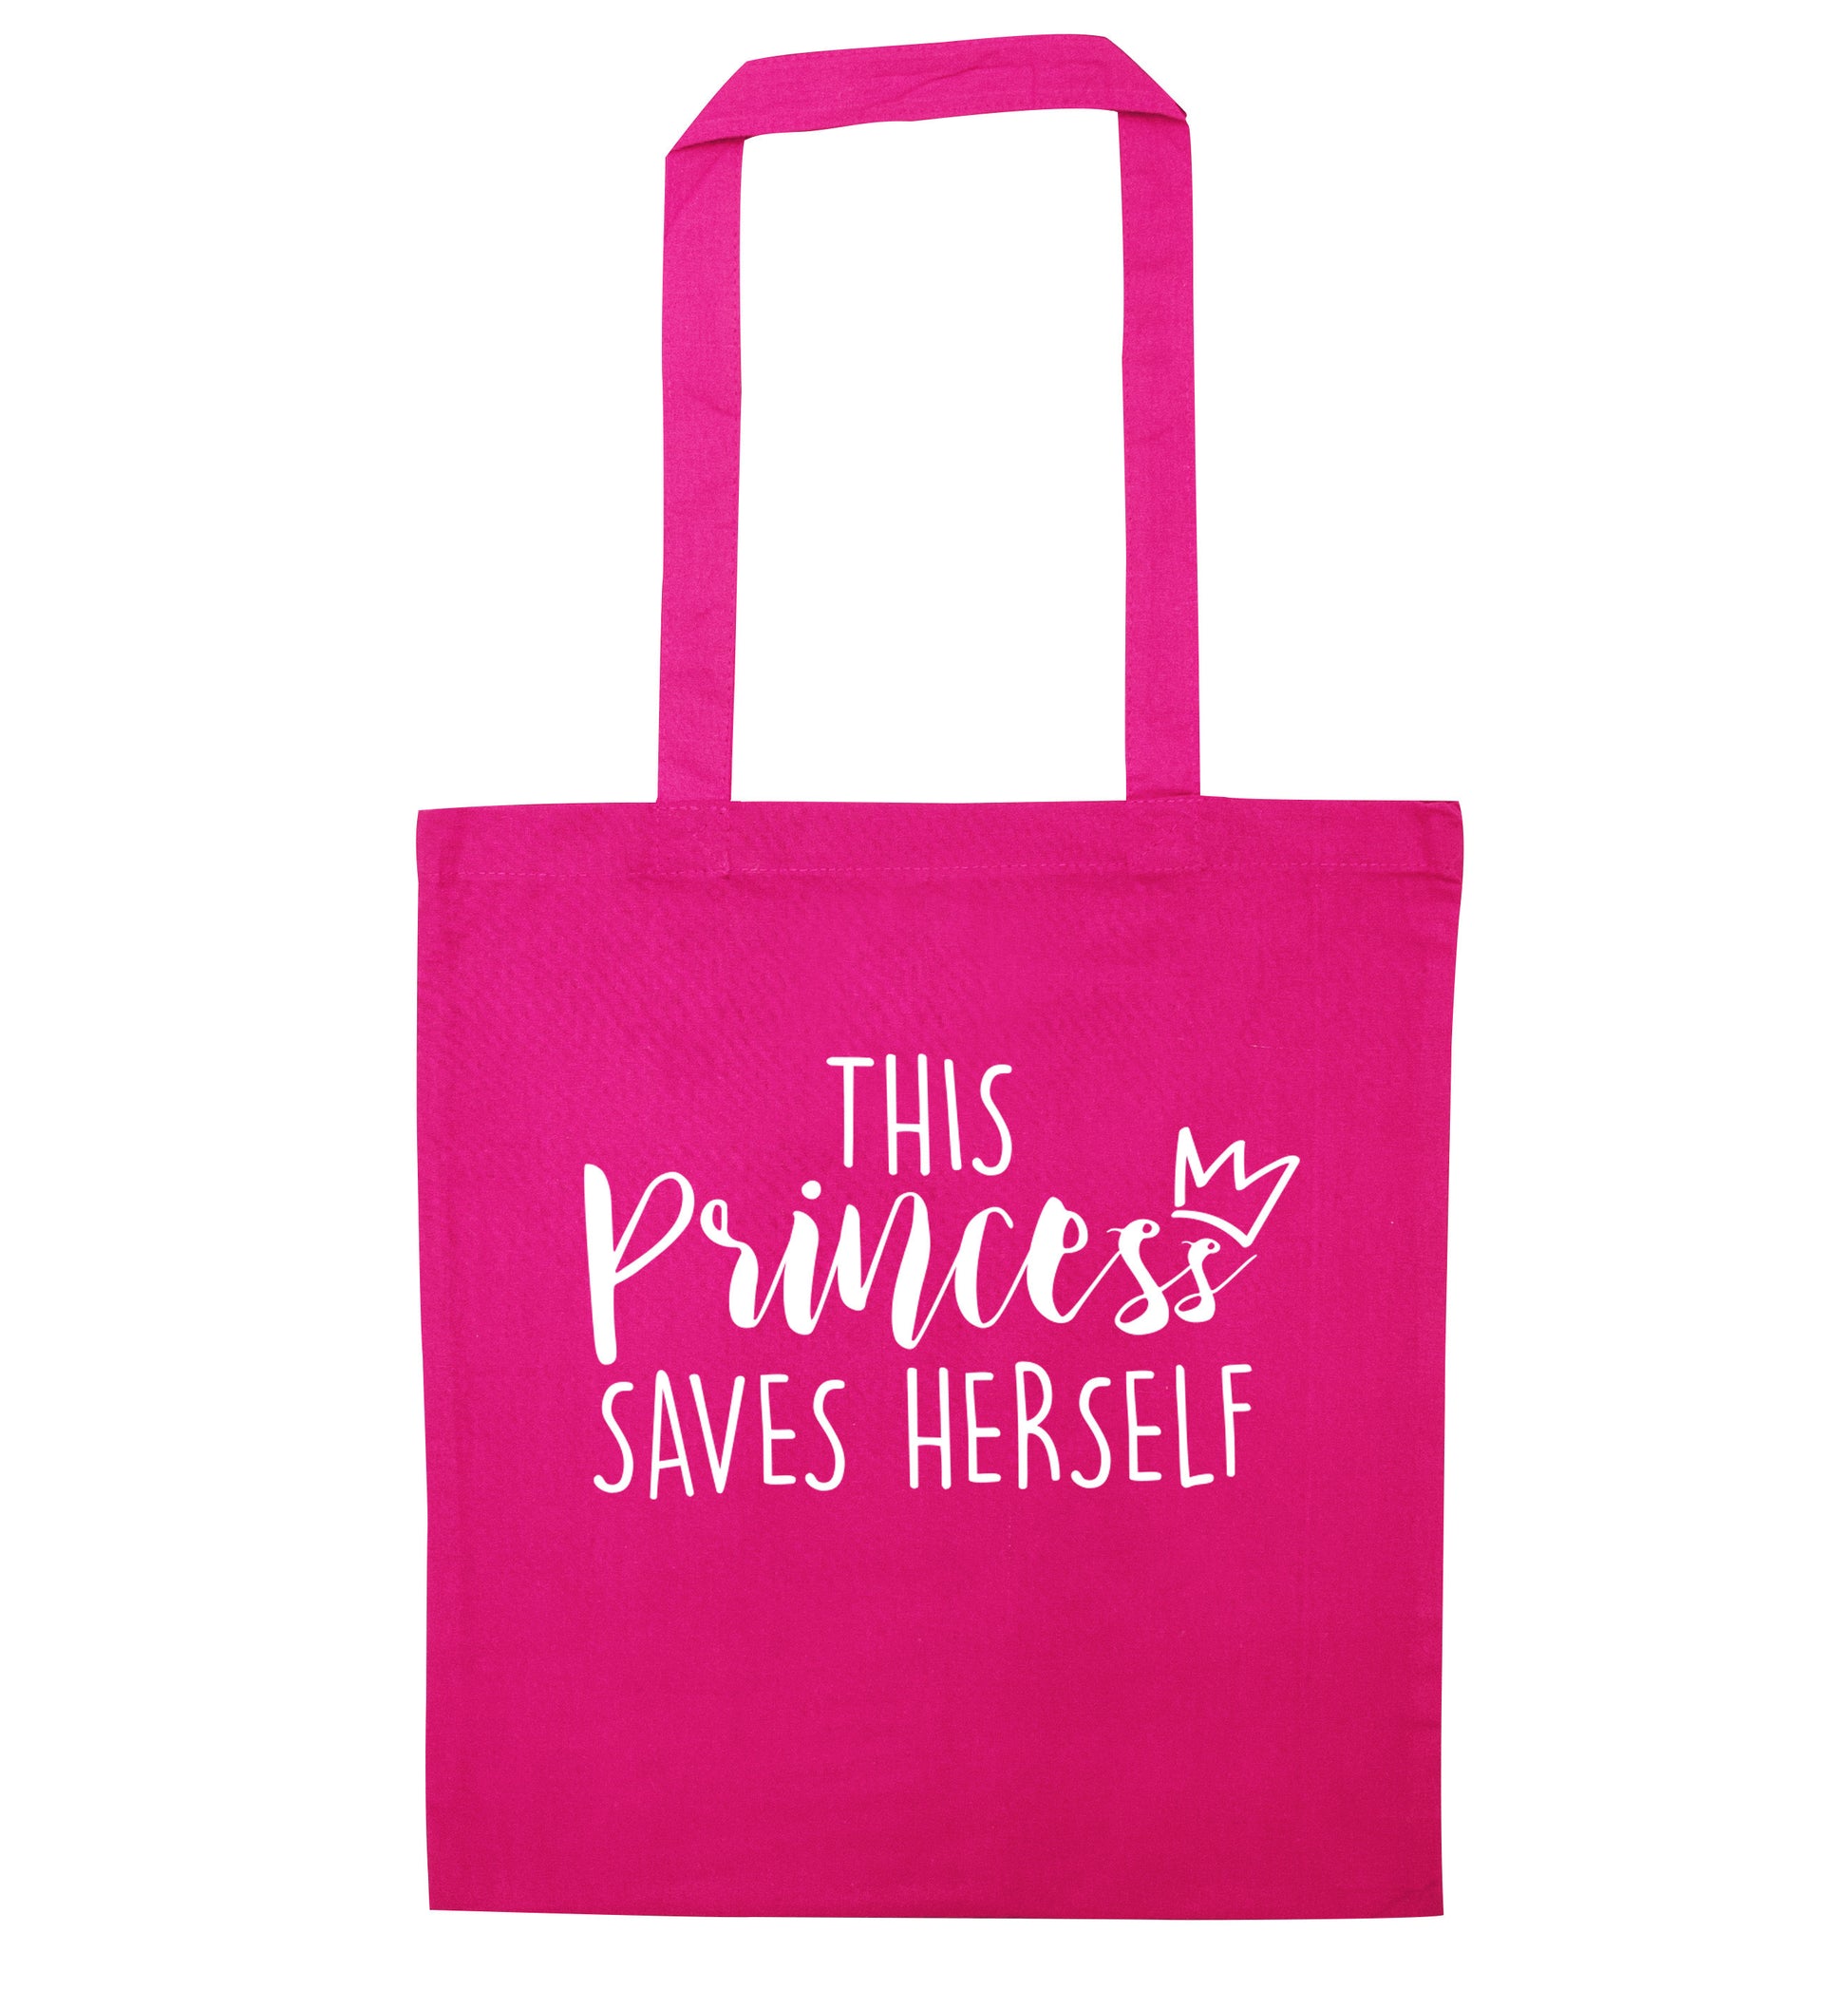 This princess saves herself pink tote bag